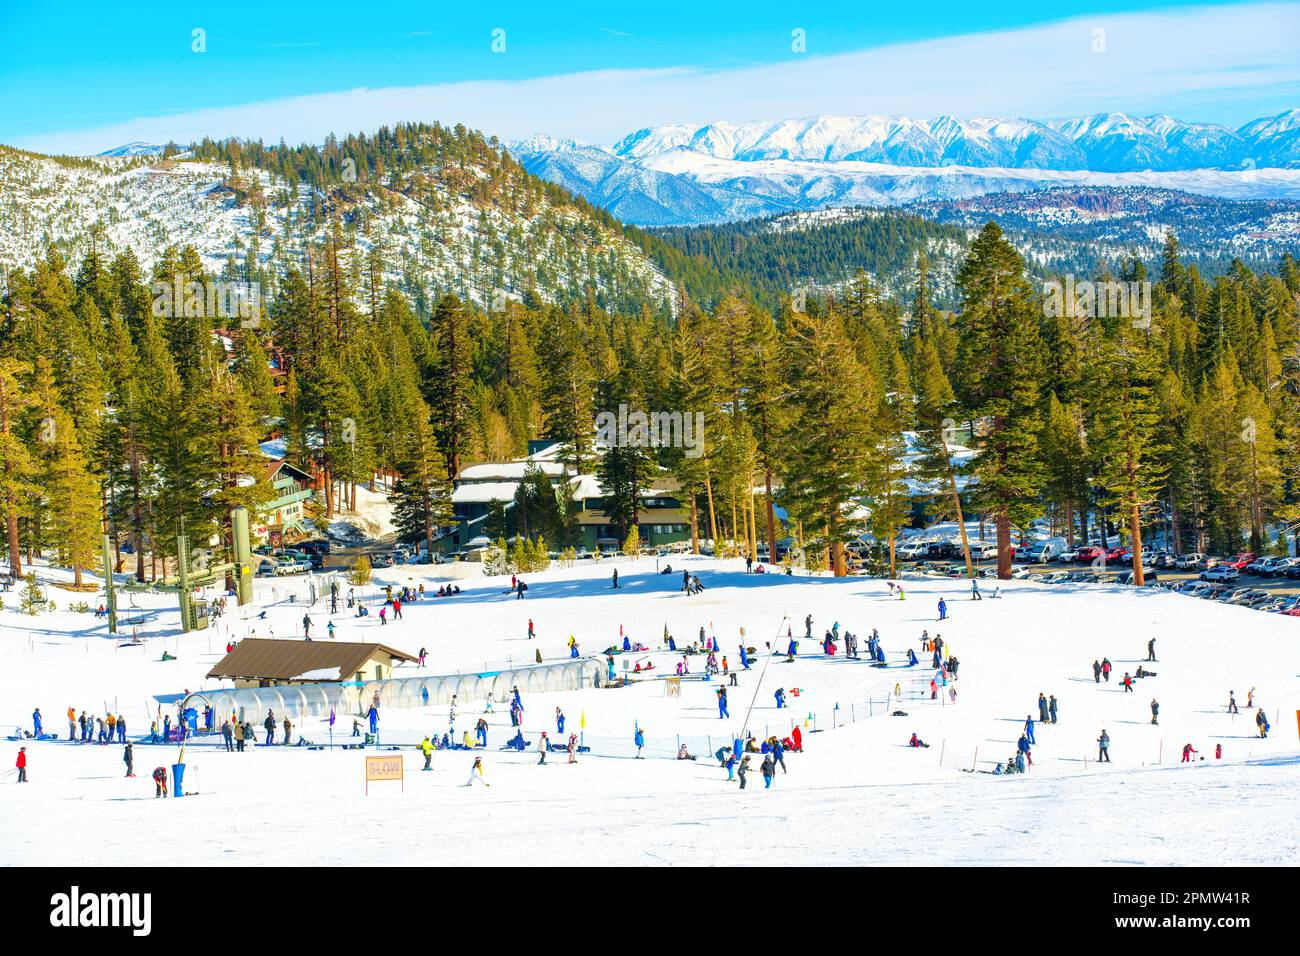 California, USA - December 24, 2022: People Skiing at the Mammoth Mountain Ski Resort Village Stock Photo